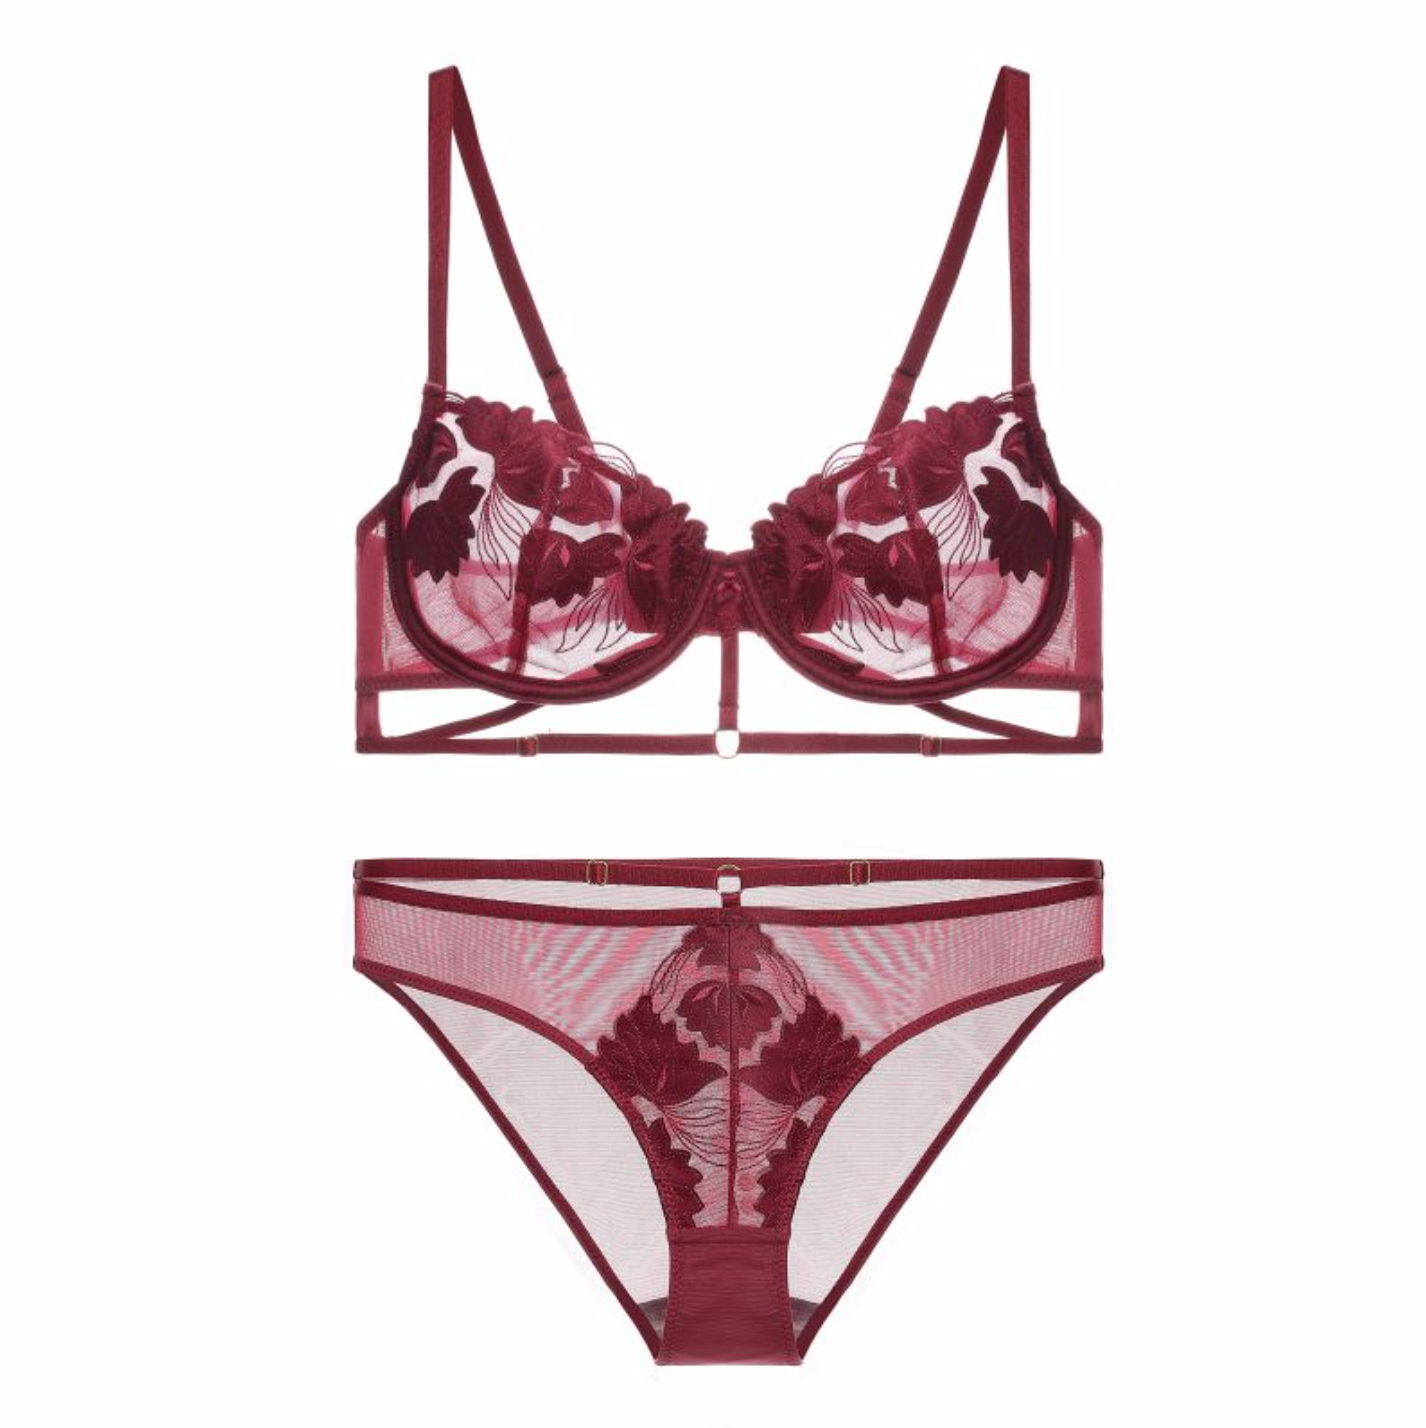 Elegant Lace Adjustable Band Matching Bralette and Panty Match Set –